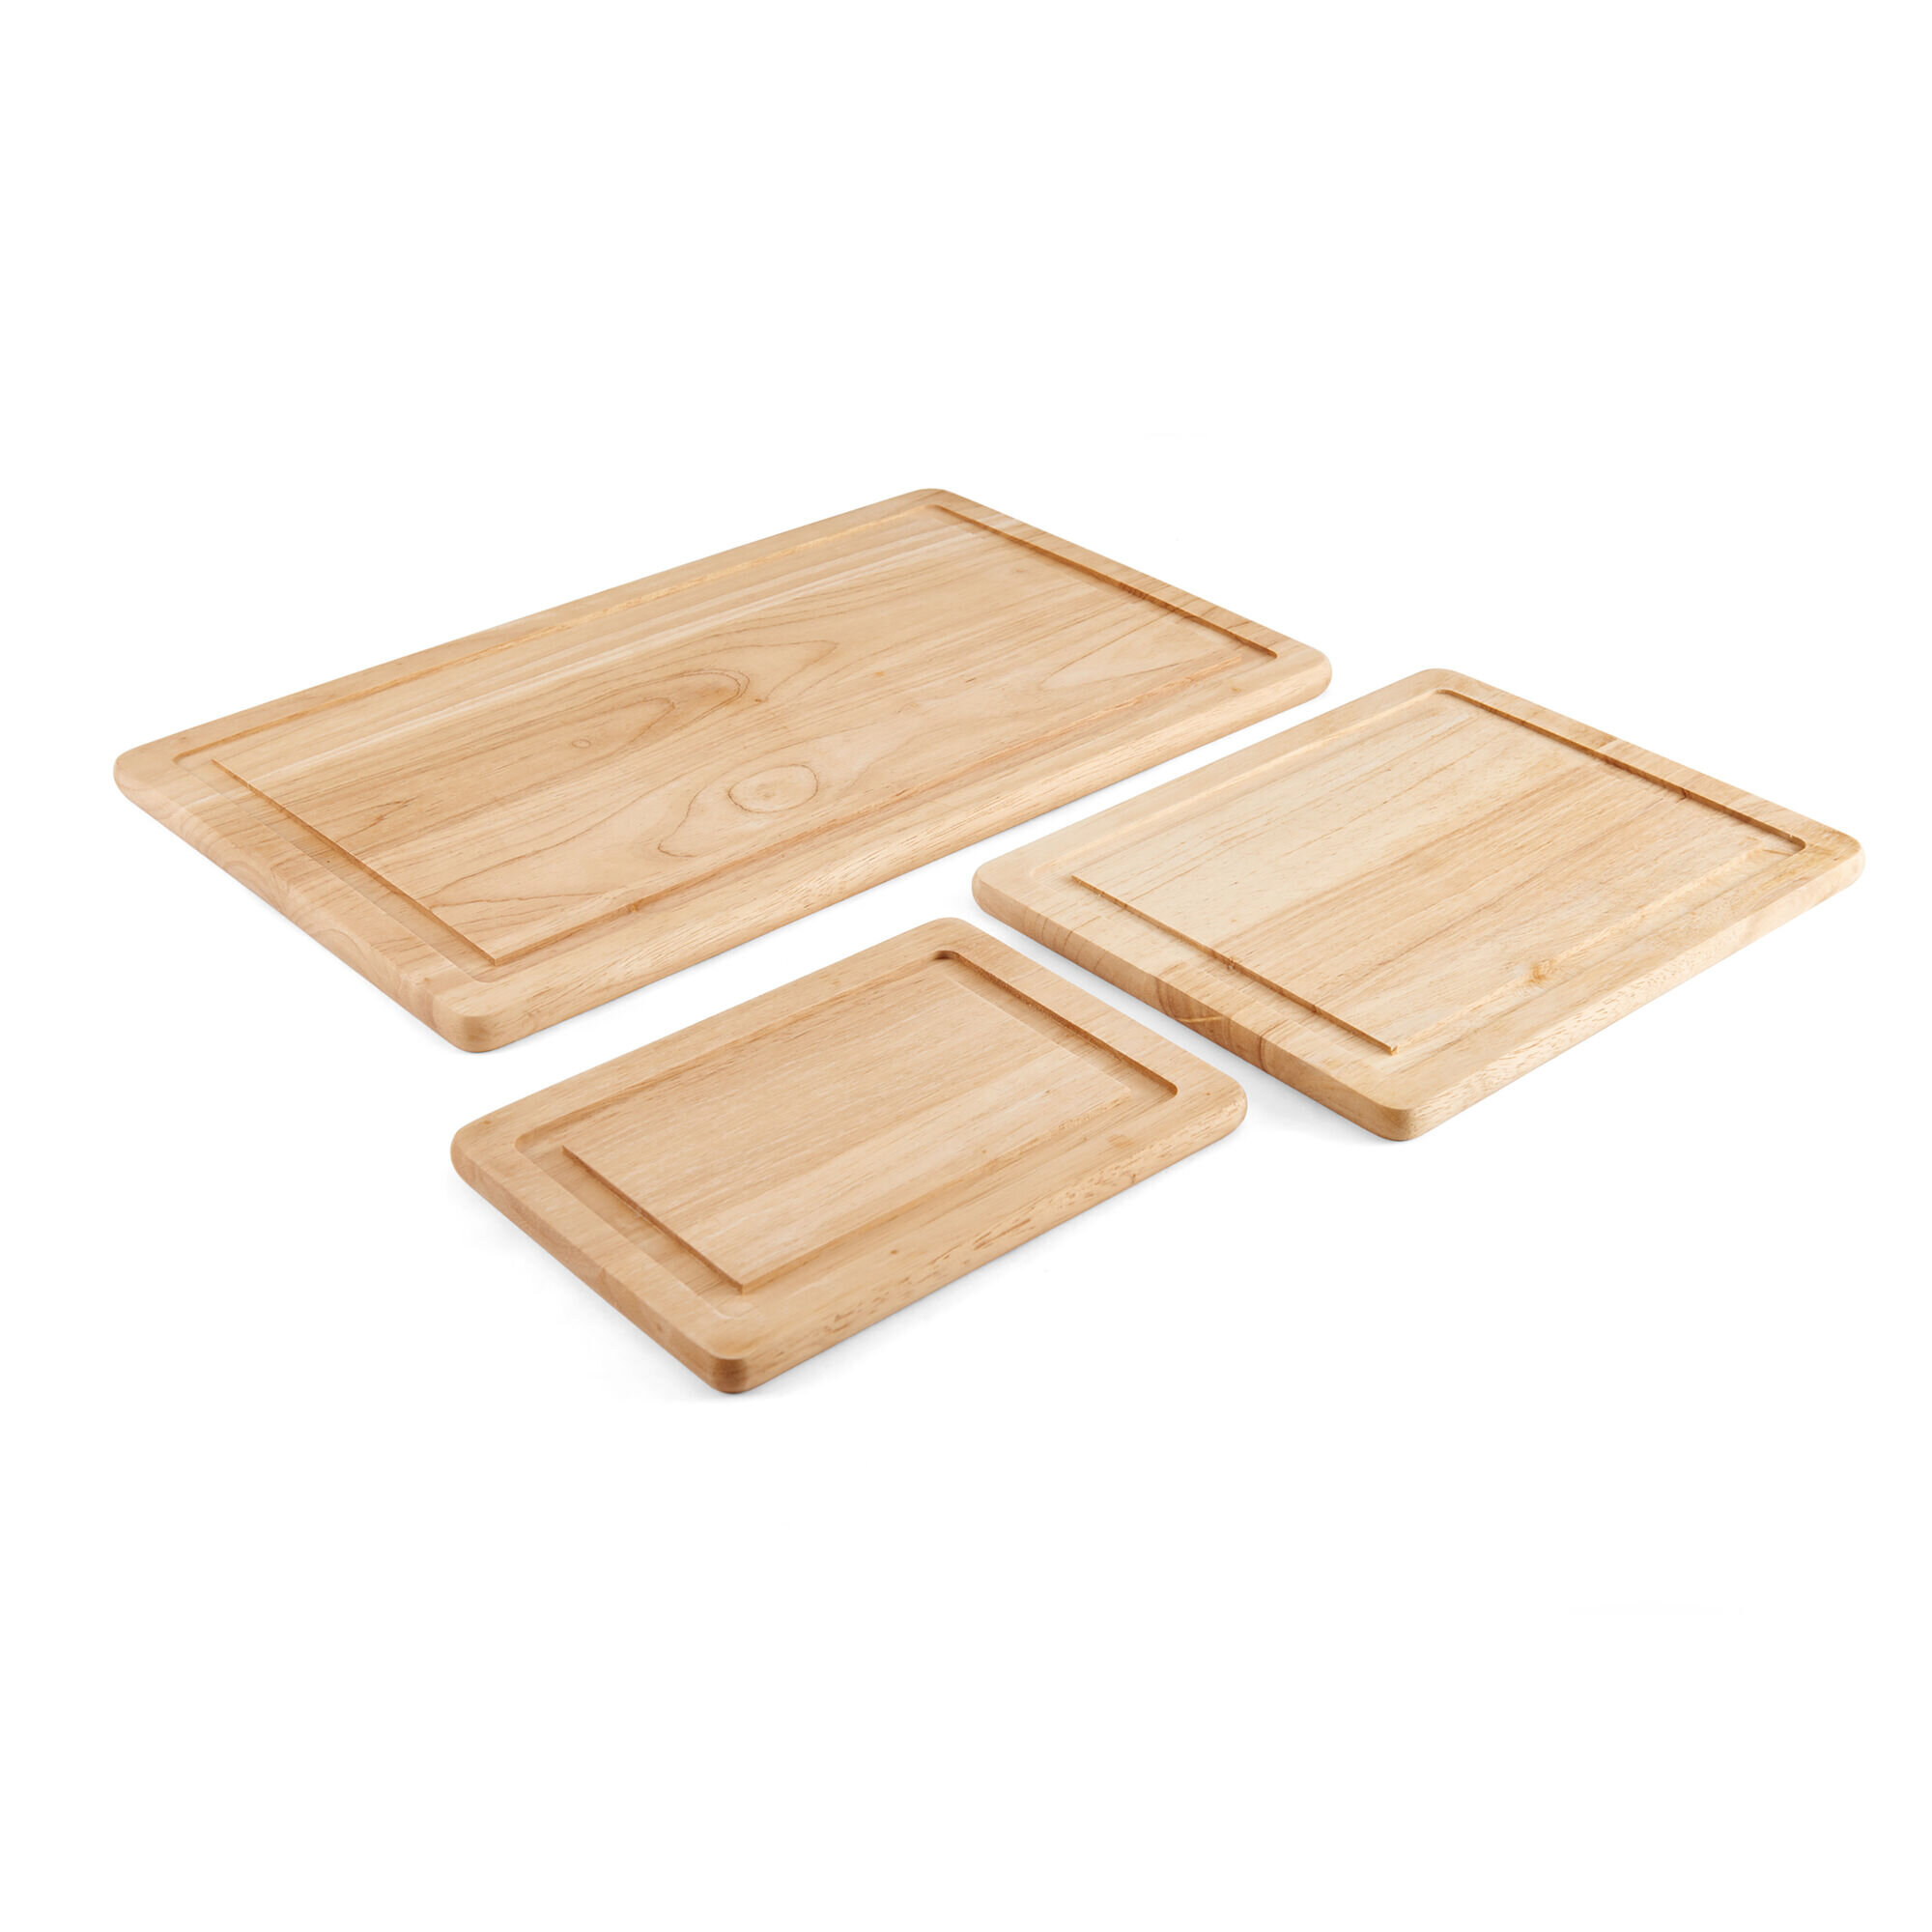 Royal Craft Wood Cutbosets Organic Bamboo Cutting Board with Juice